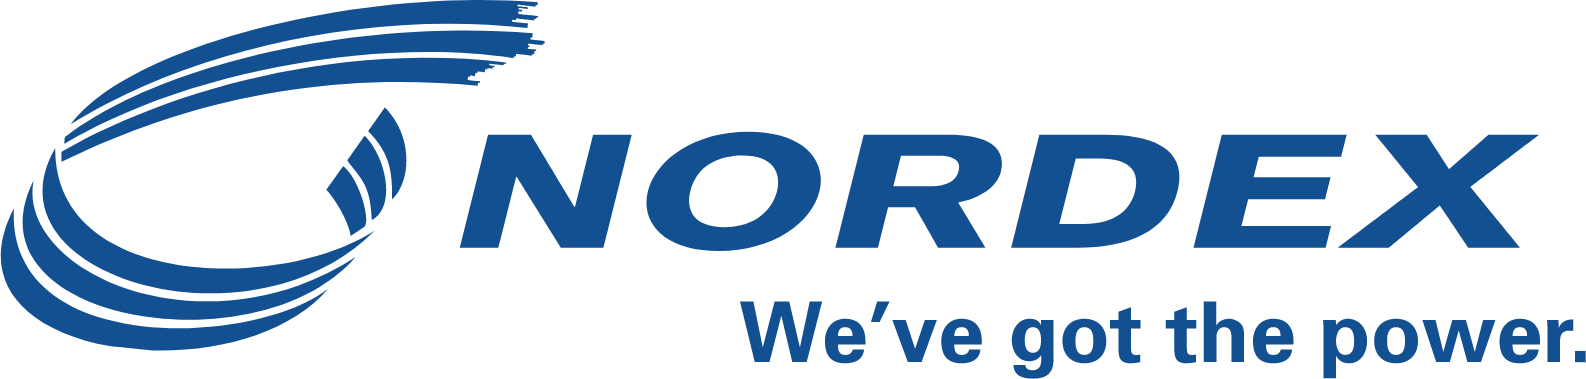 Nordex logo large (transparent PNG)